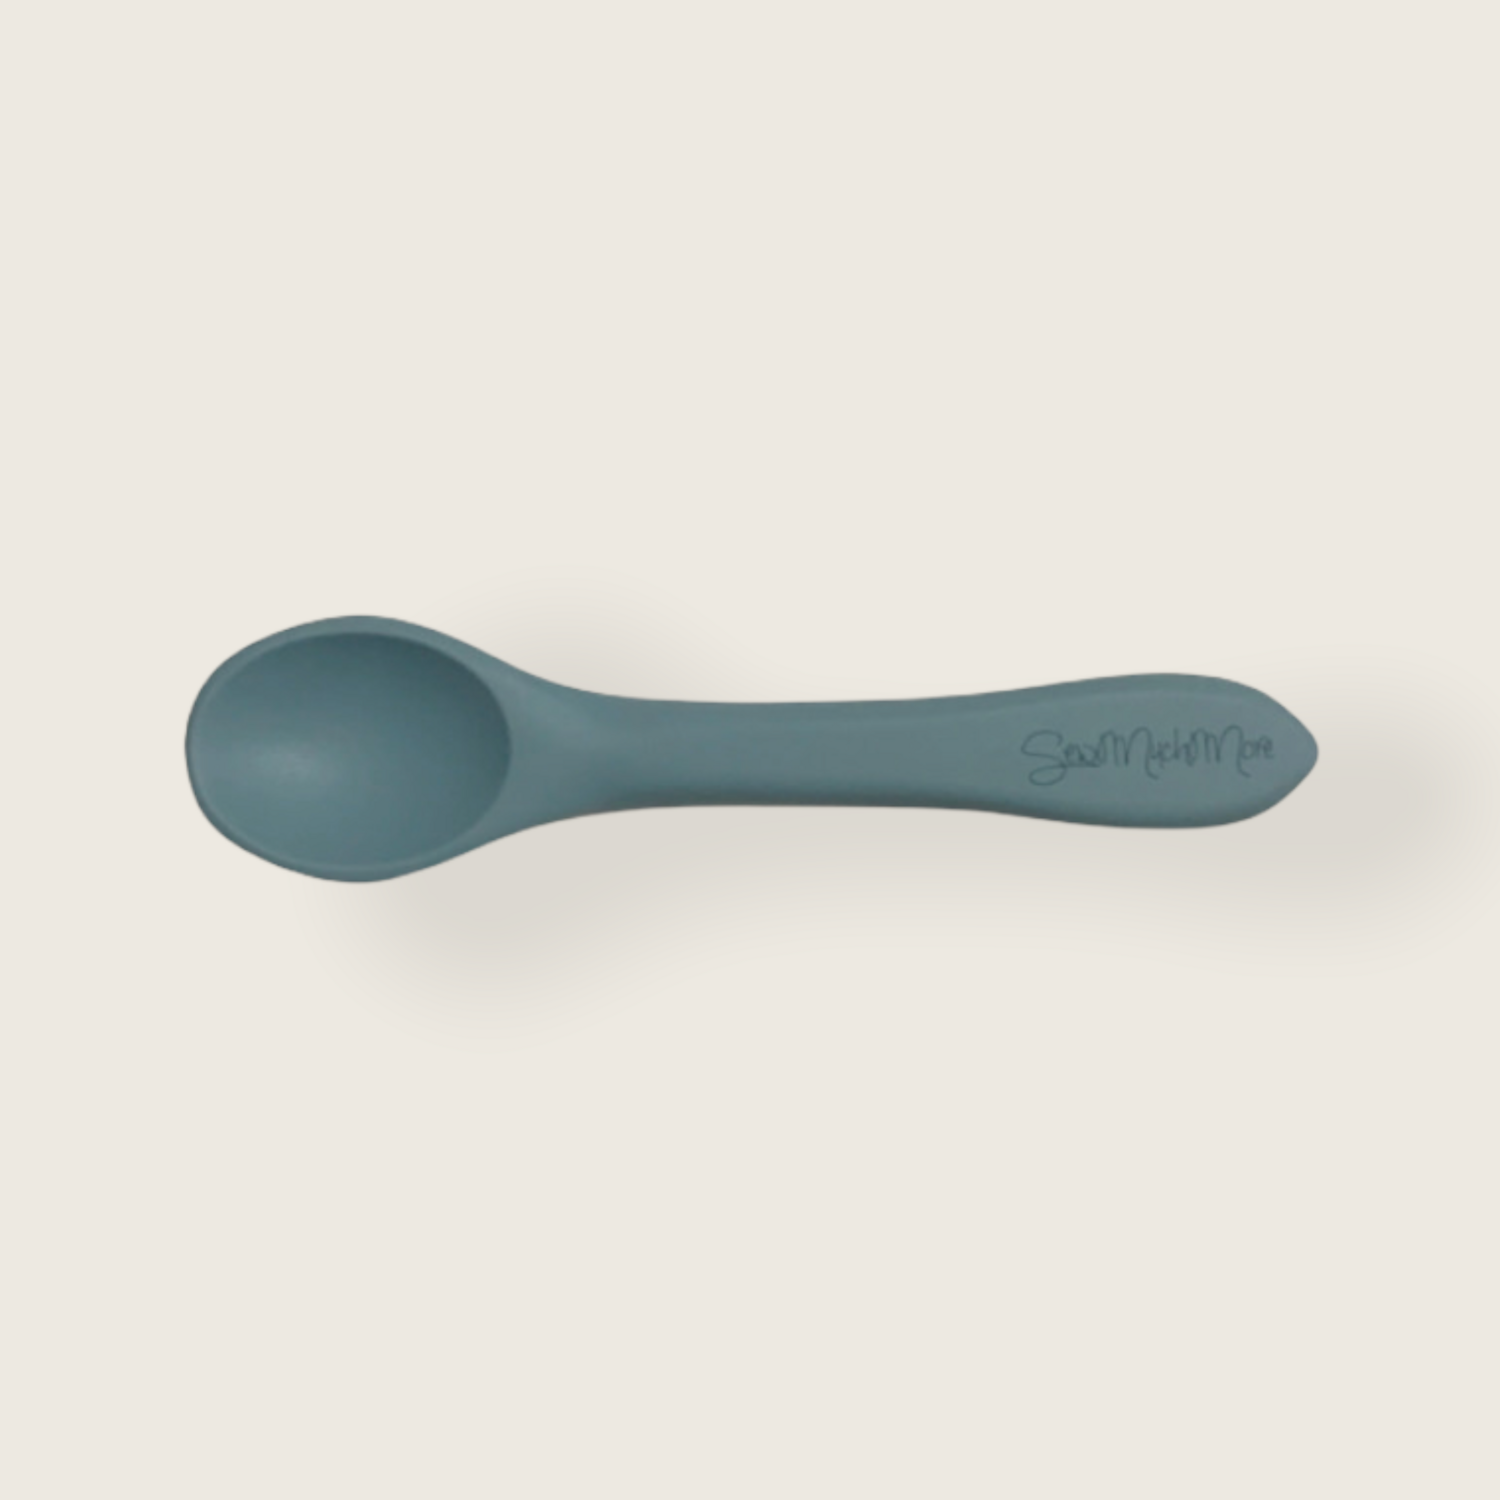 Starter Spoon | OYSTER